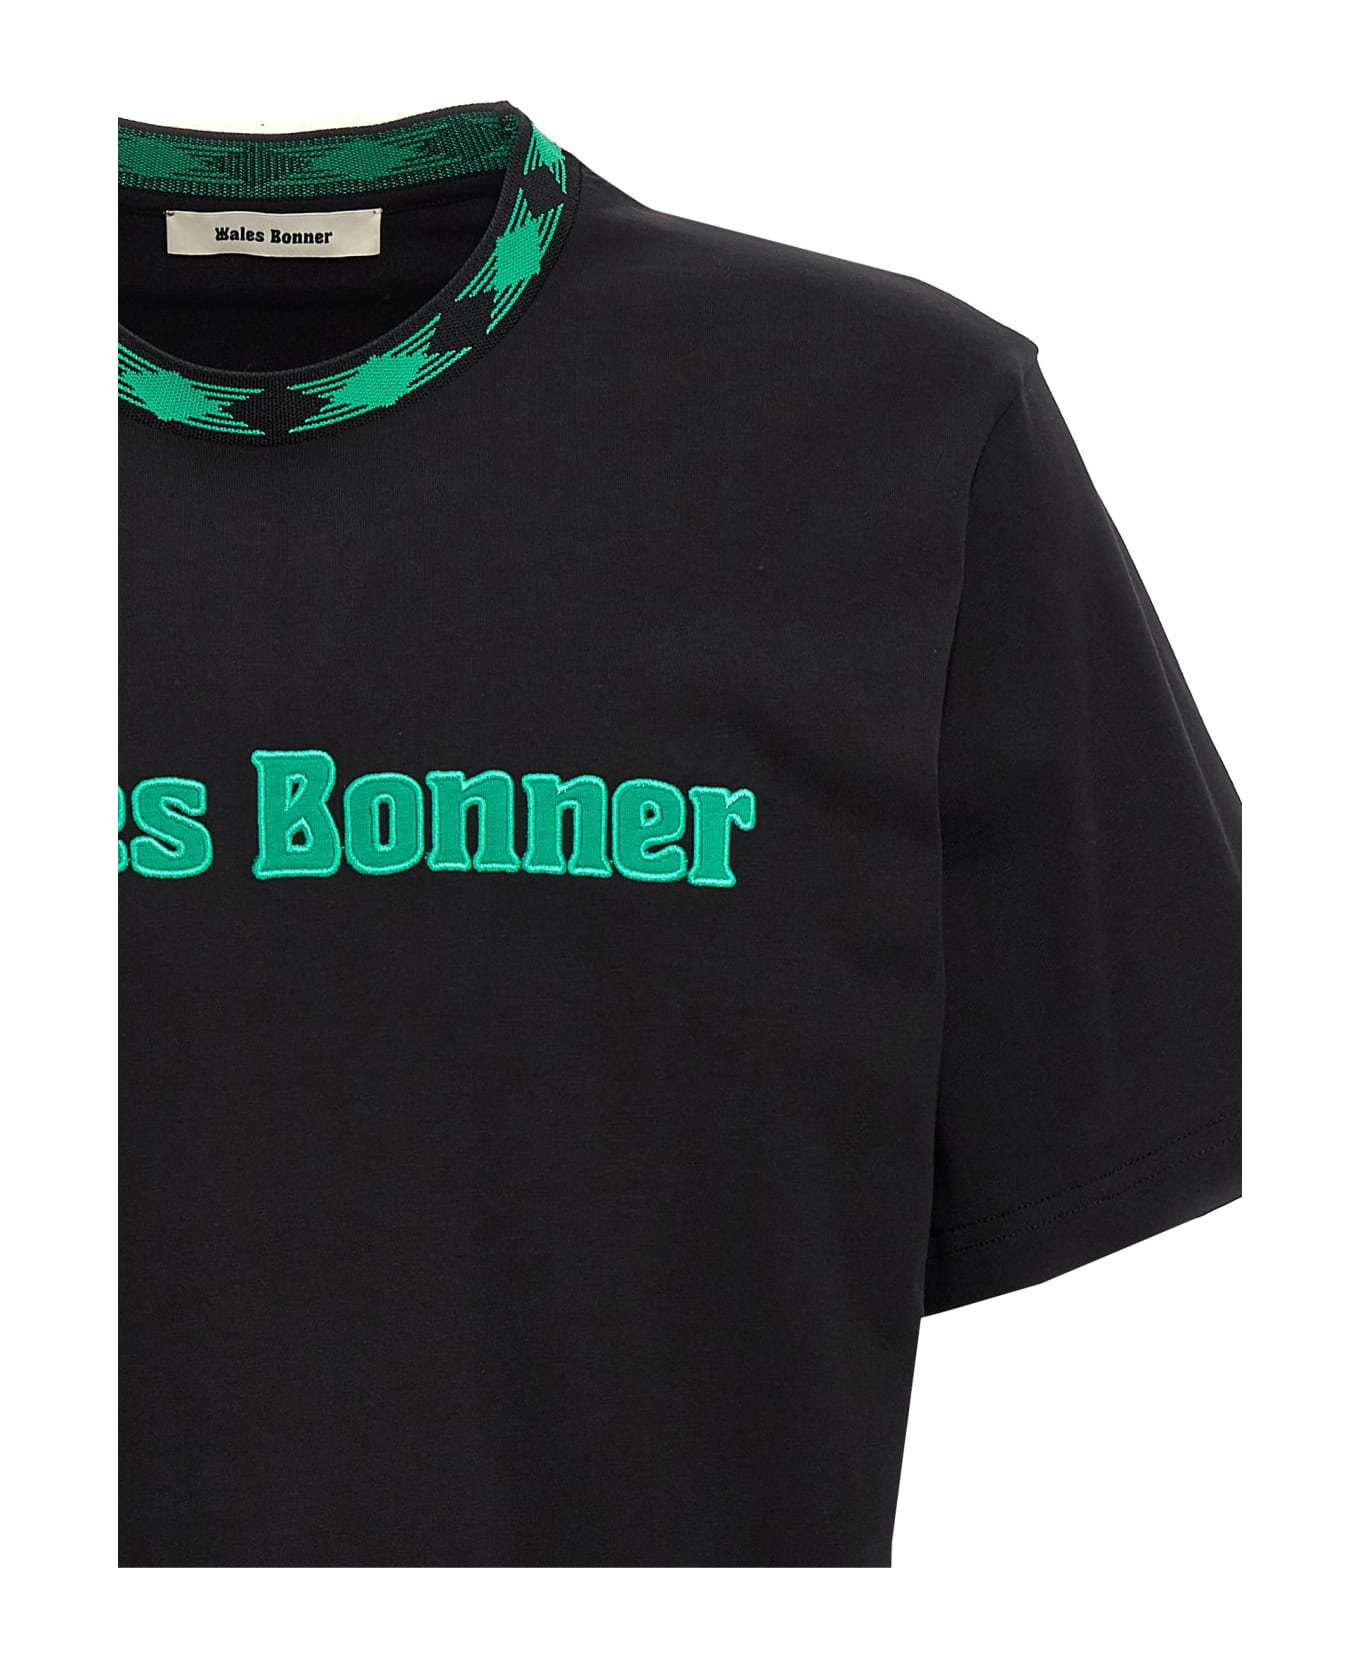 Wales Bonner 'original' T-shirt - BLACK シャツ